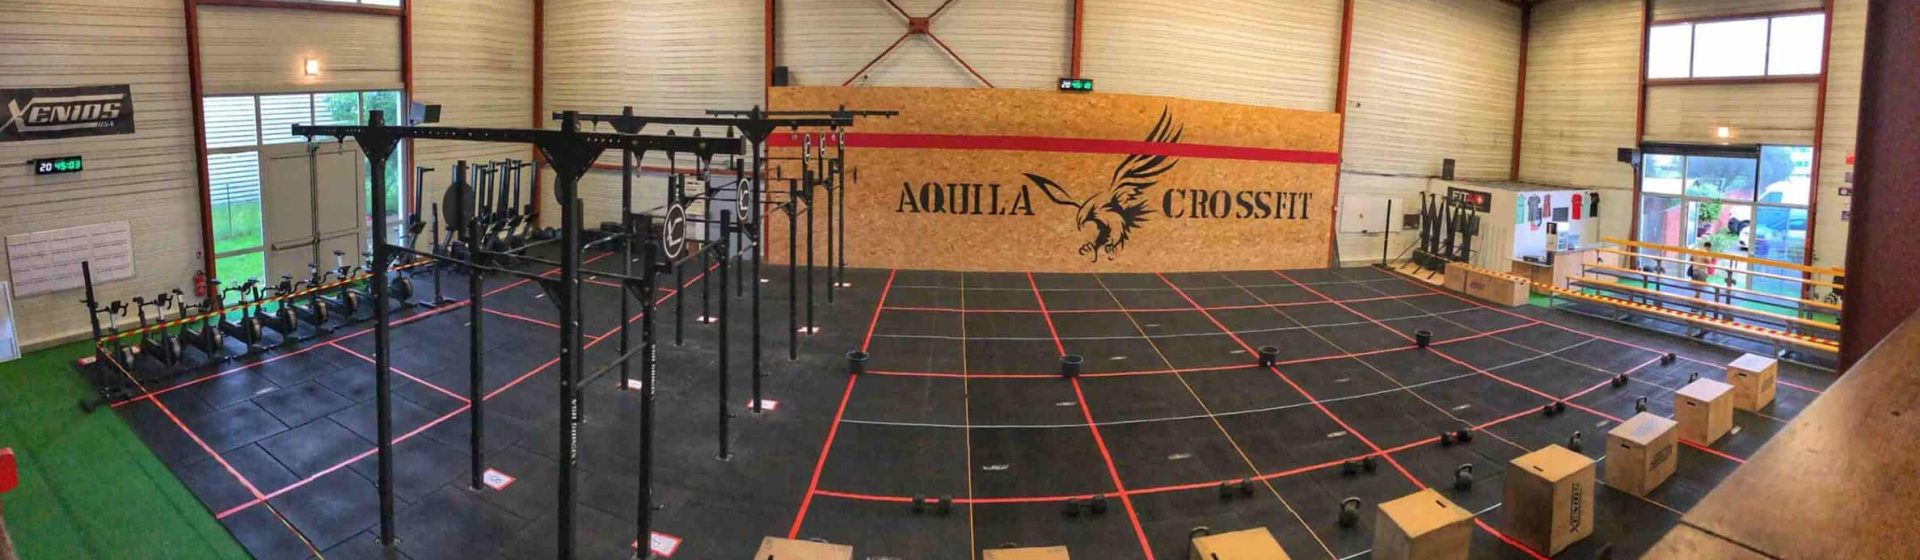 Aquila CrossFit